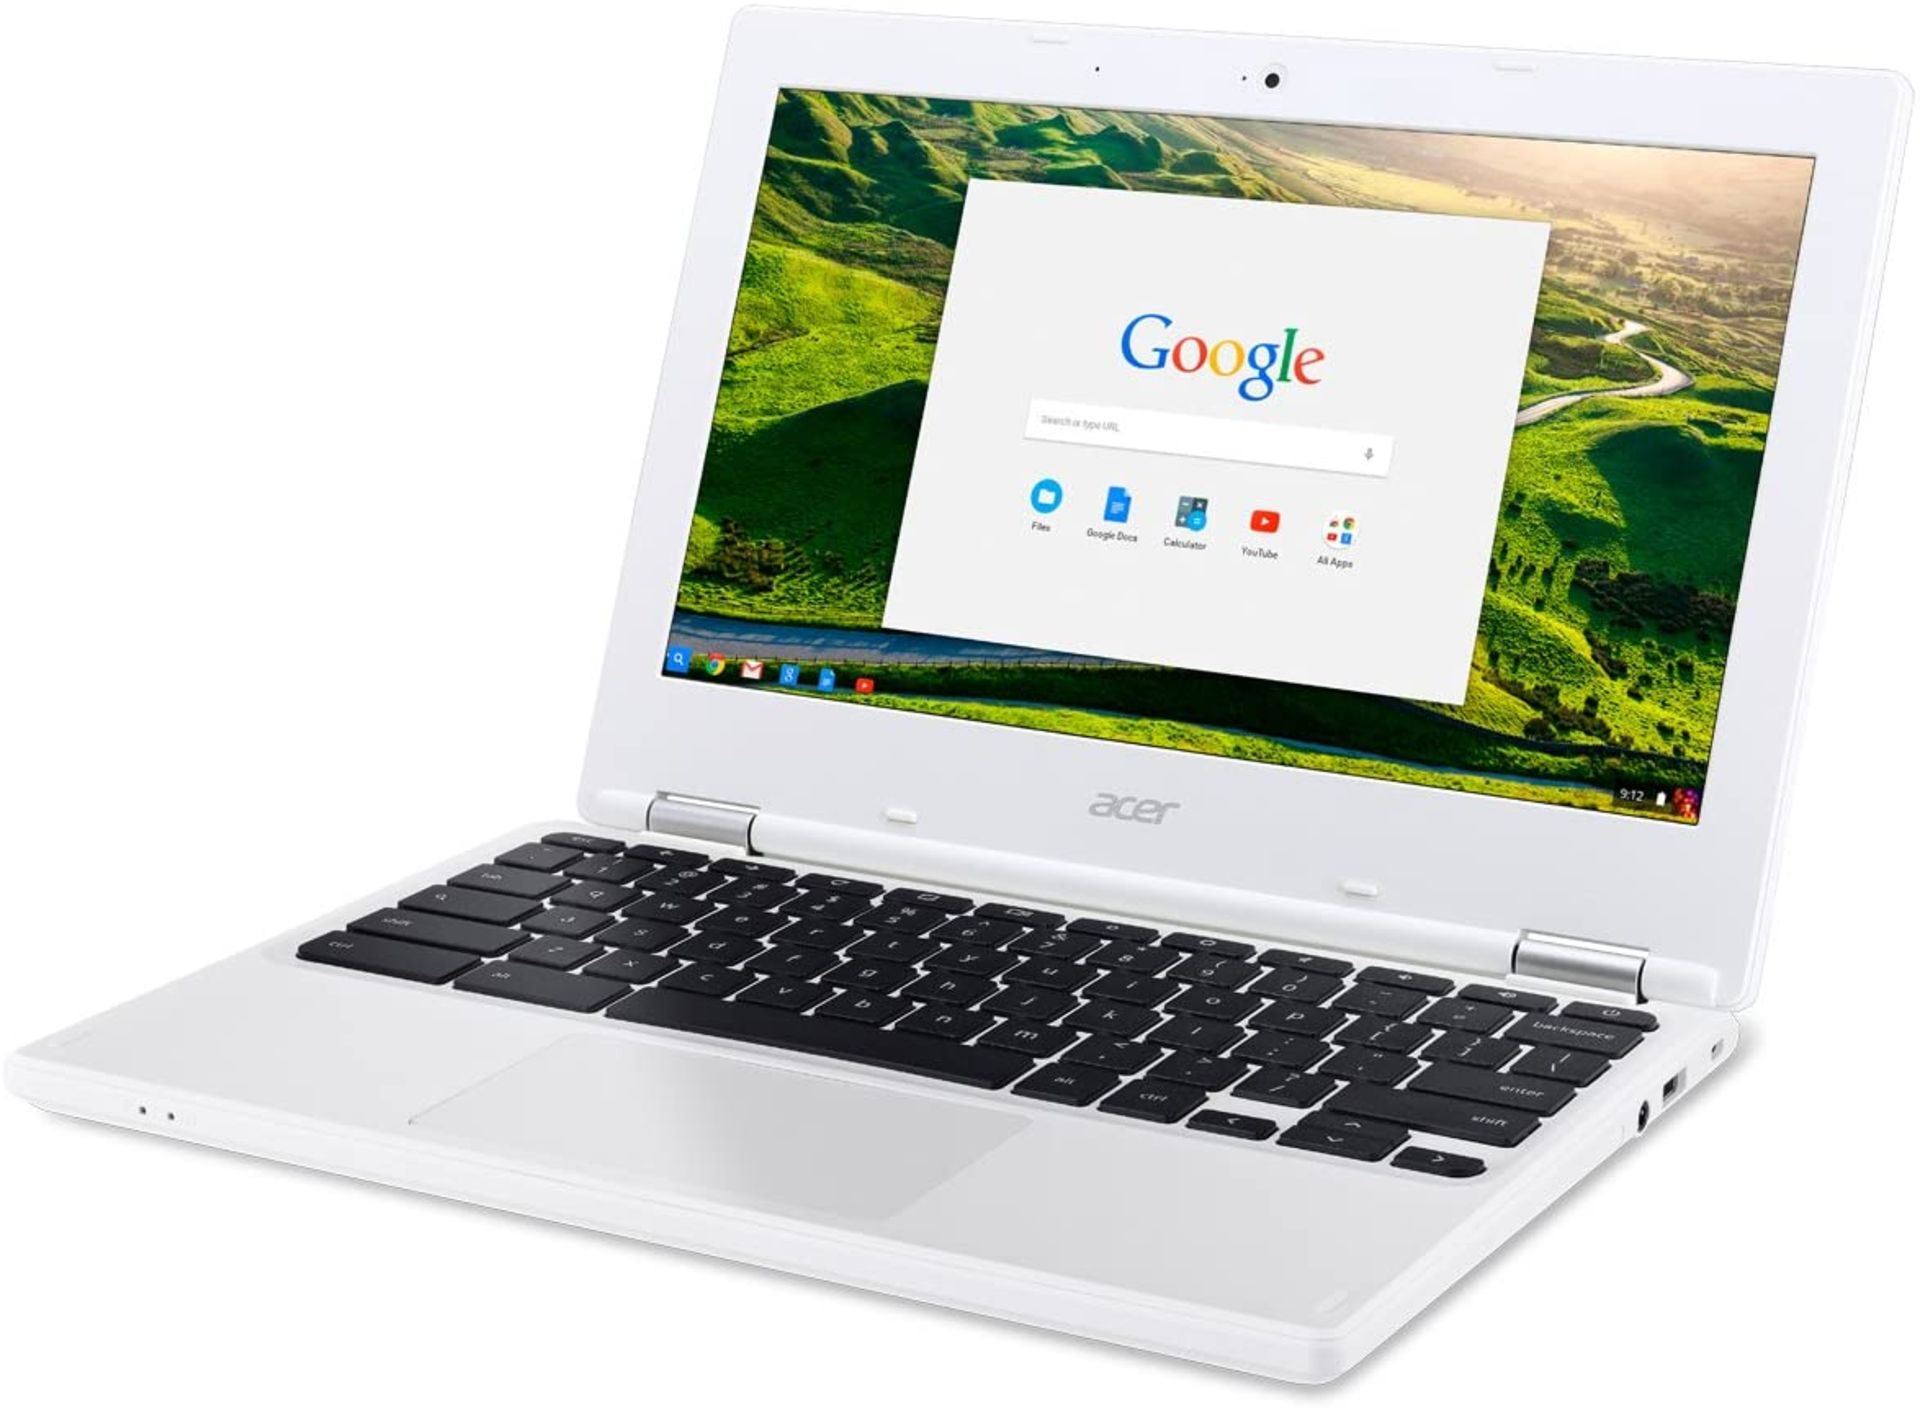 (M5) Acer Chromebook 11.6 inches Laptop CB3-131 Intel Celeron N2840 2 GB 16GB EMMC Chrome White... - Image 3 of 4